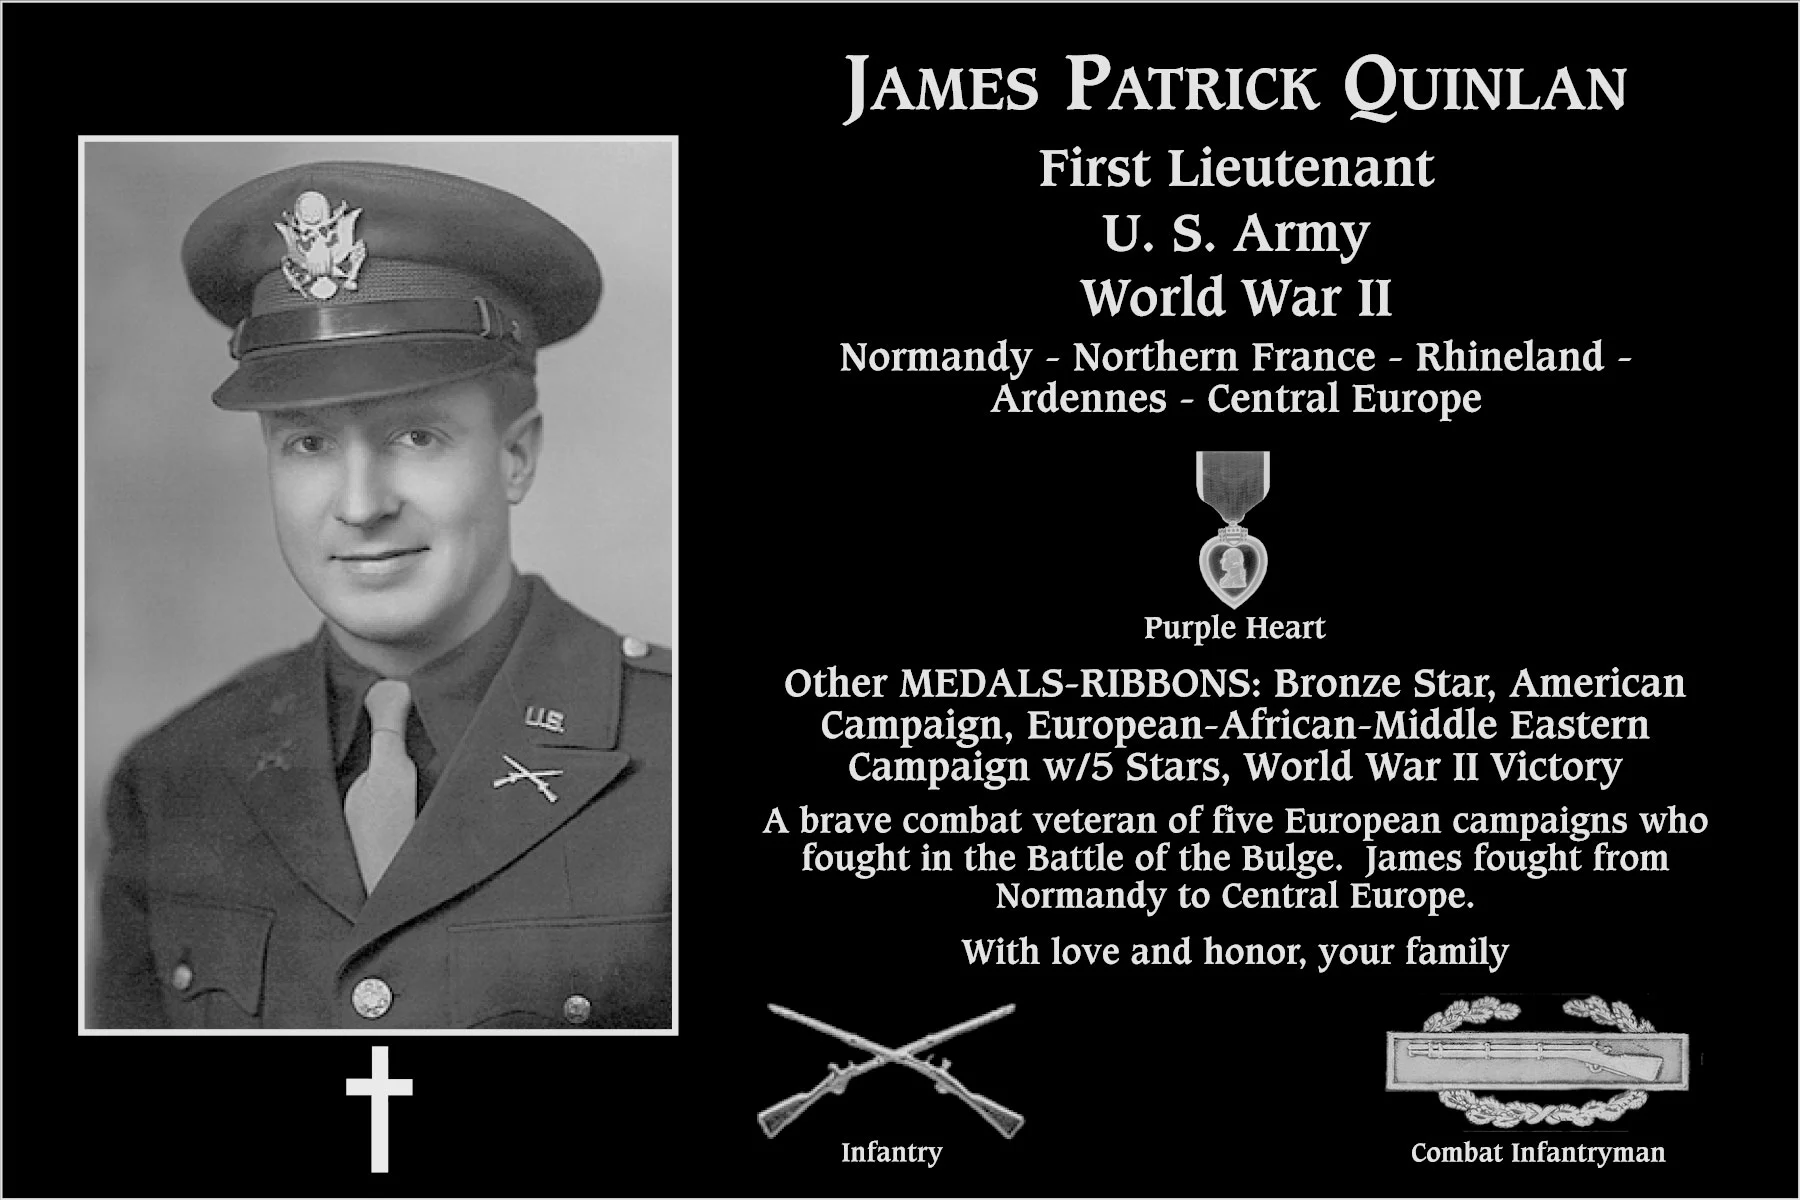 James Patrick Quinlan